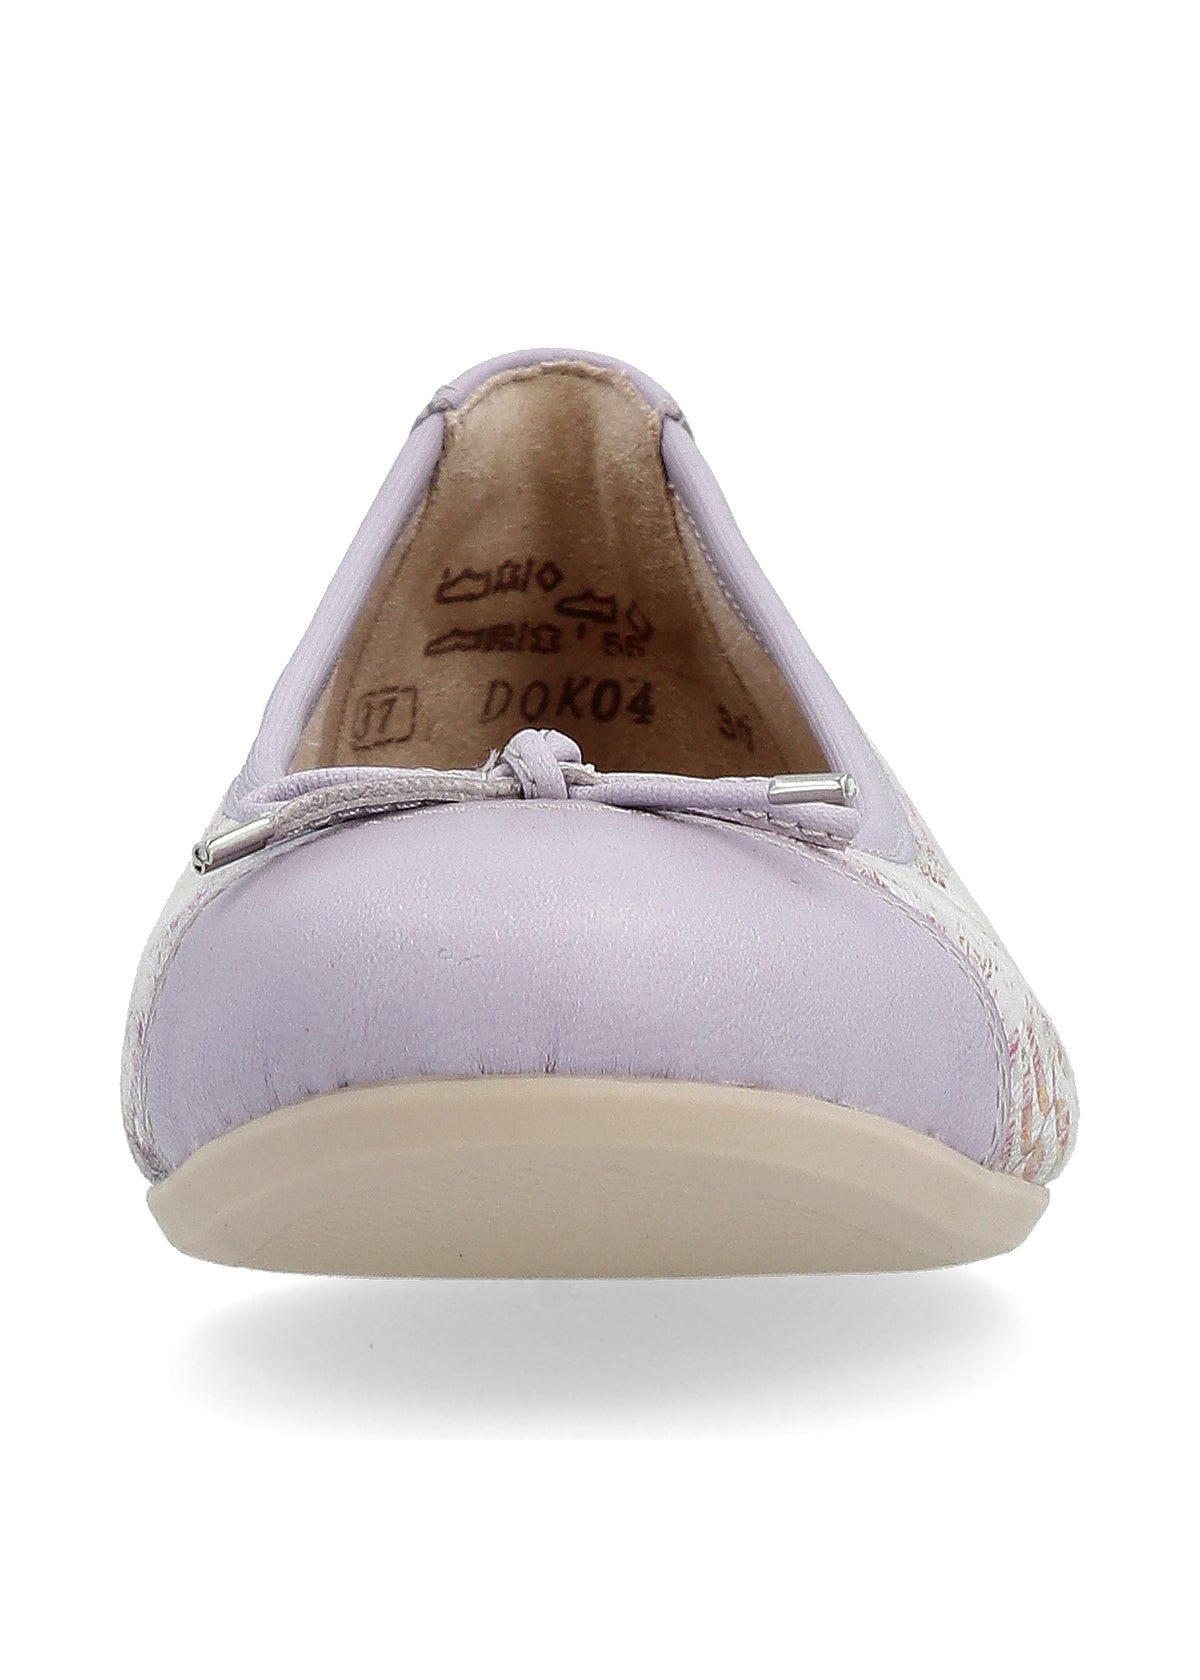 Ballerina shoes - light purple, floral patterns, bow decoration